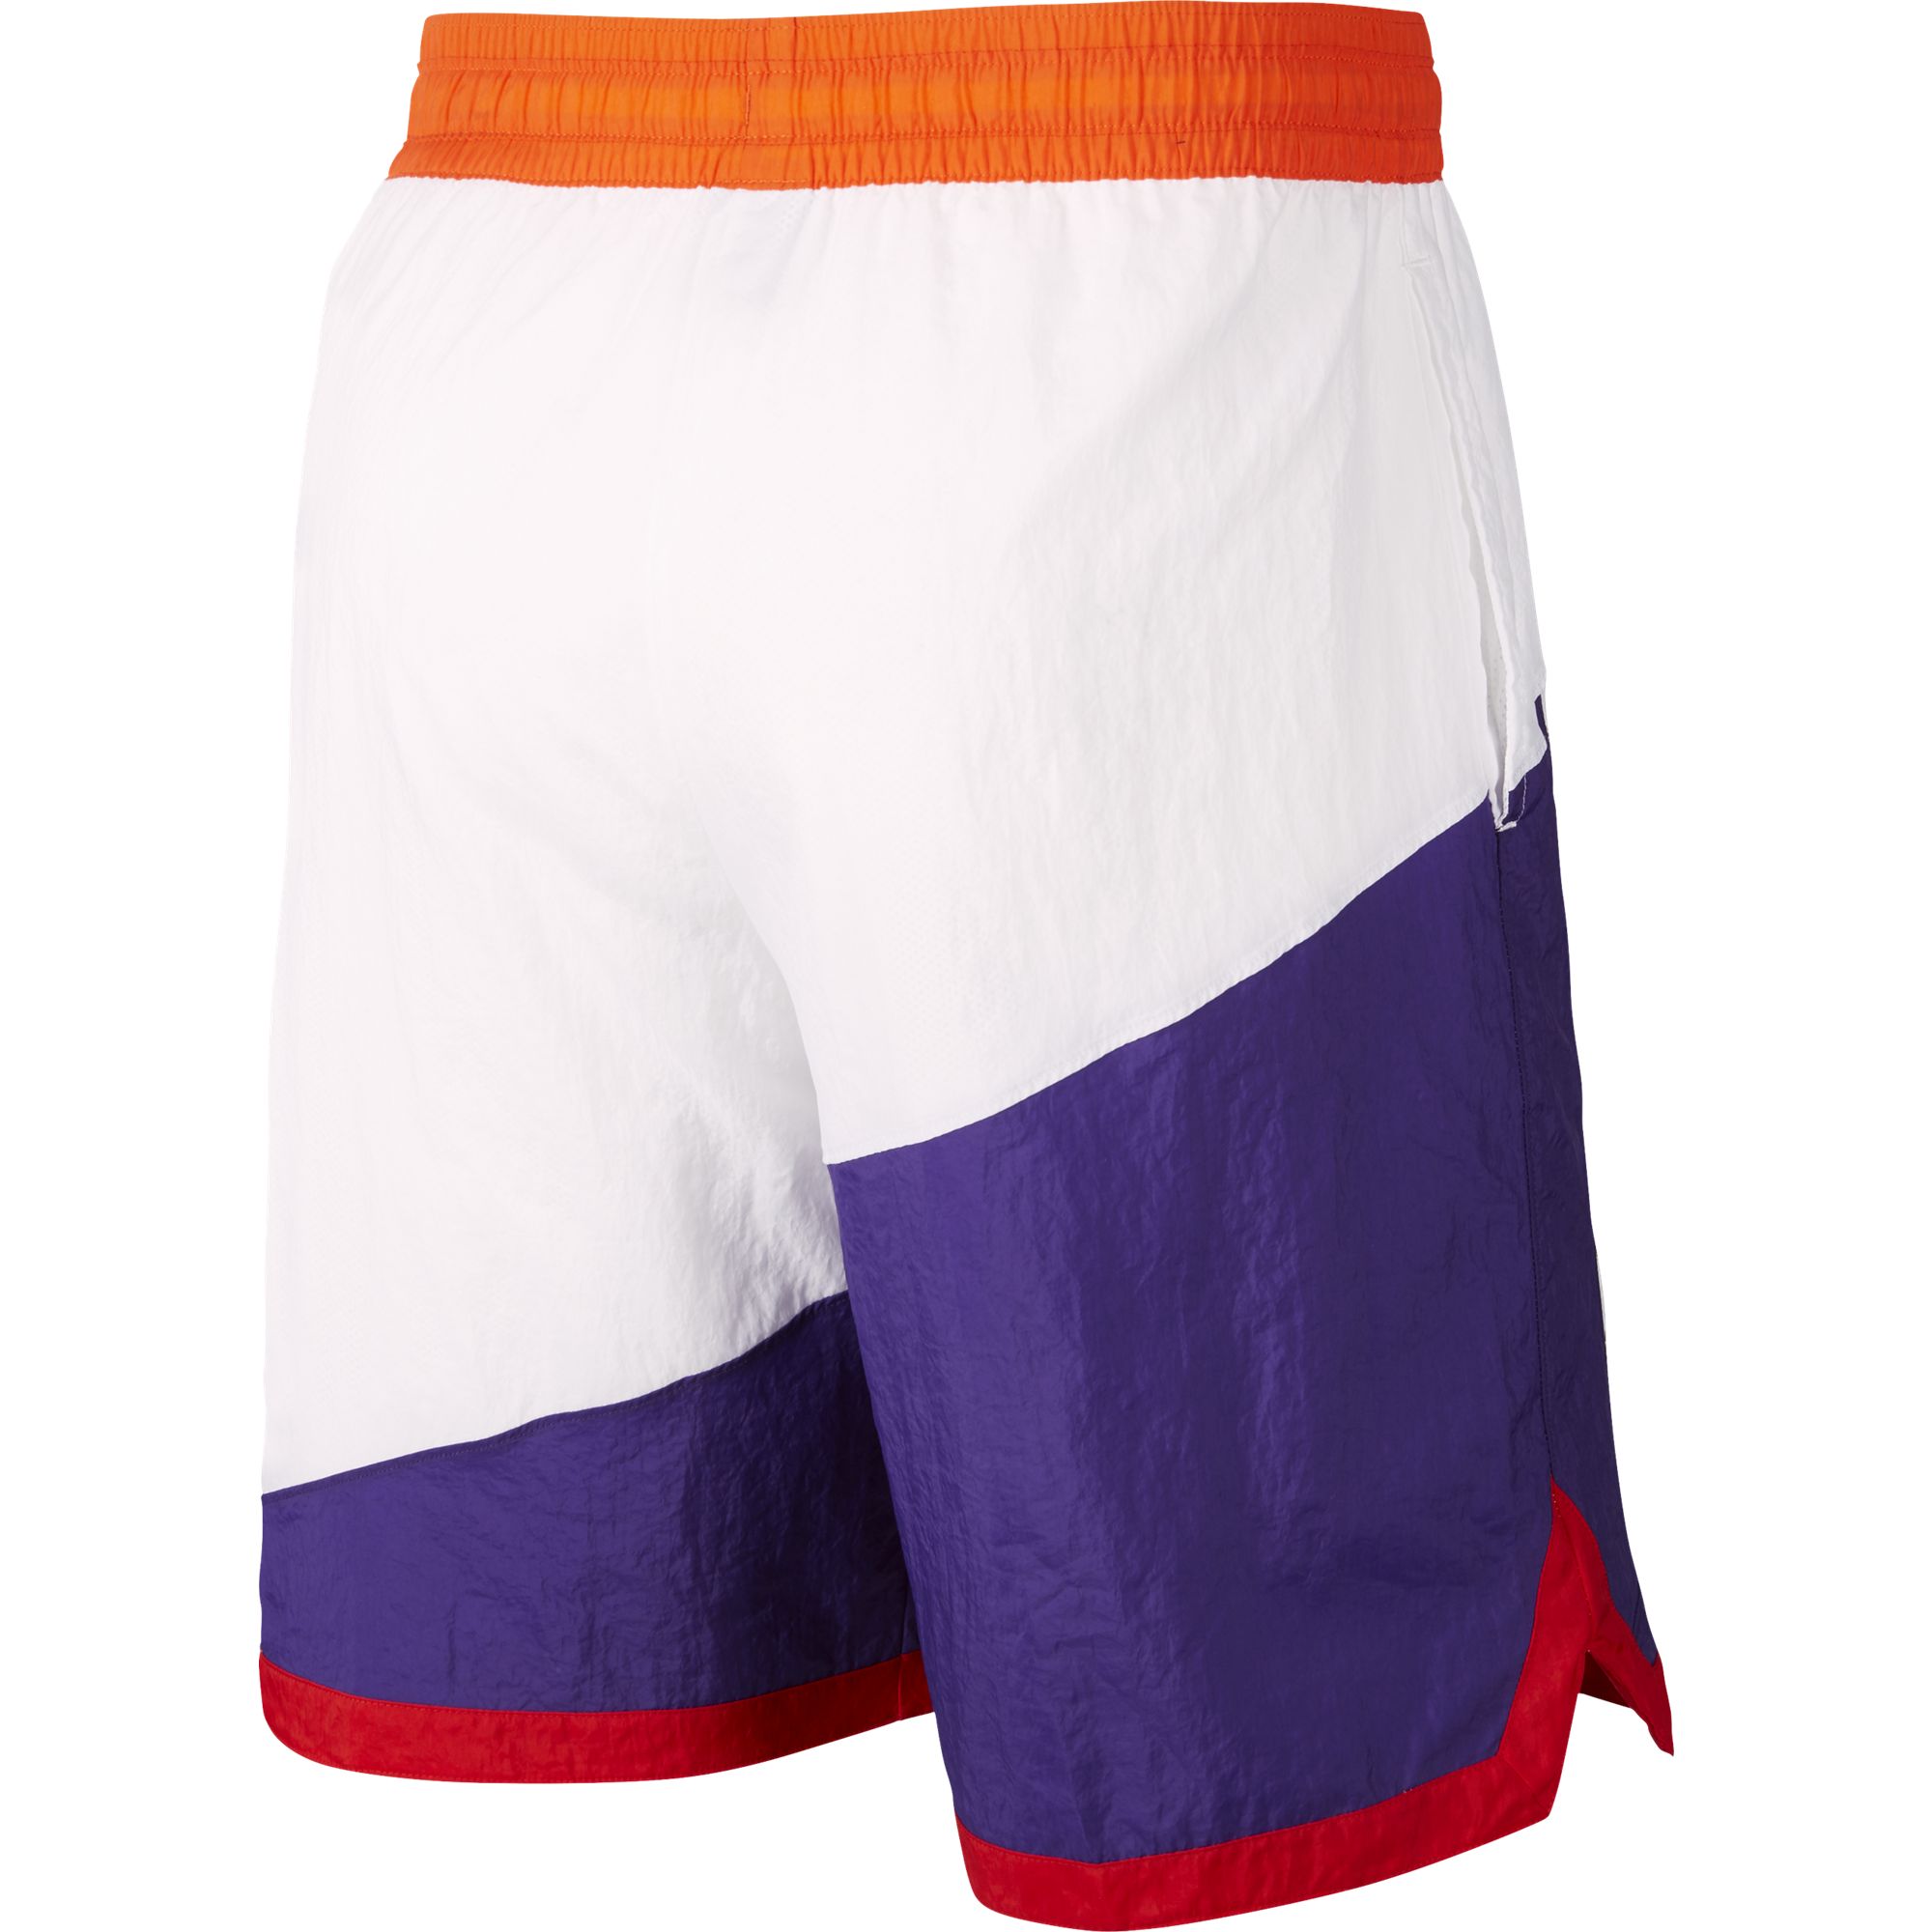 court purple nike shorts